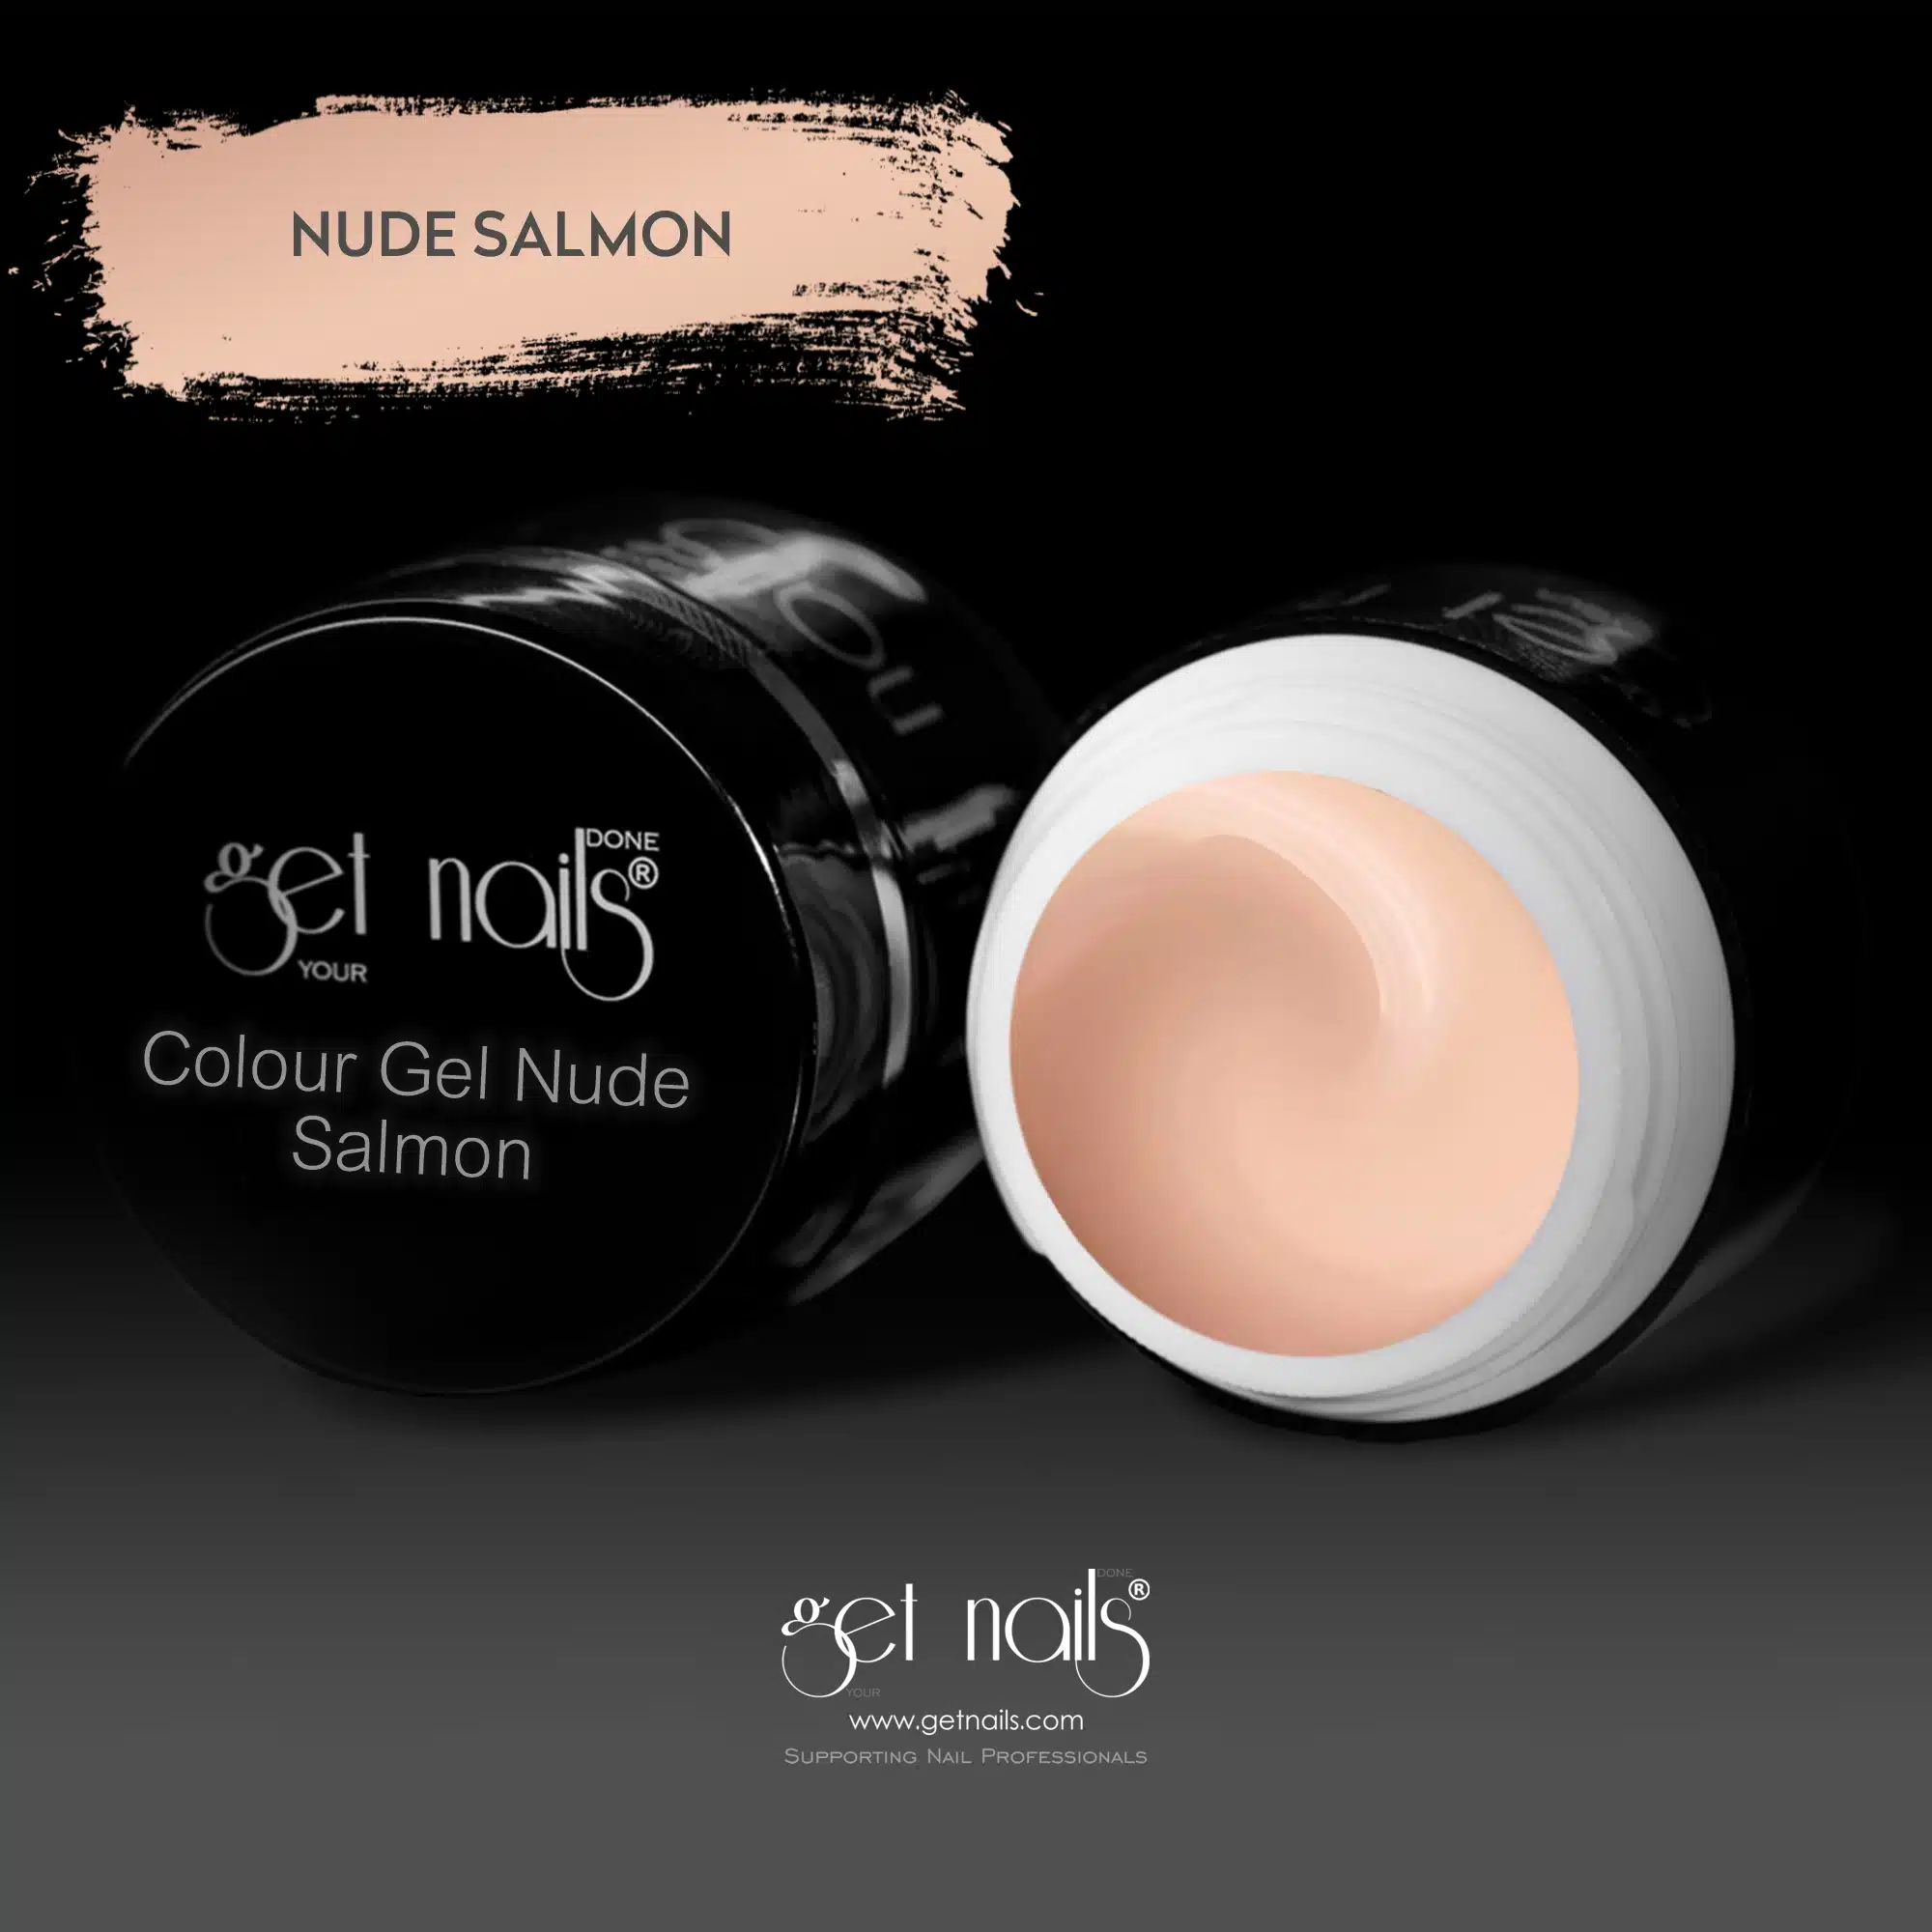 Get Nails Austria - Color Gel Nude Salmon 5g